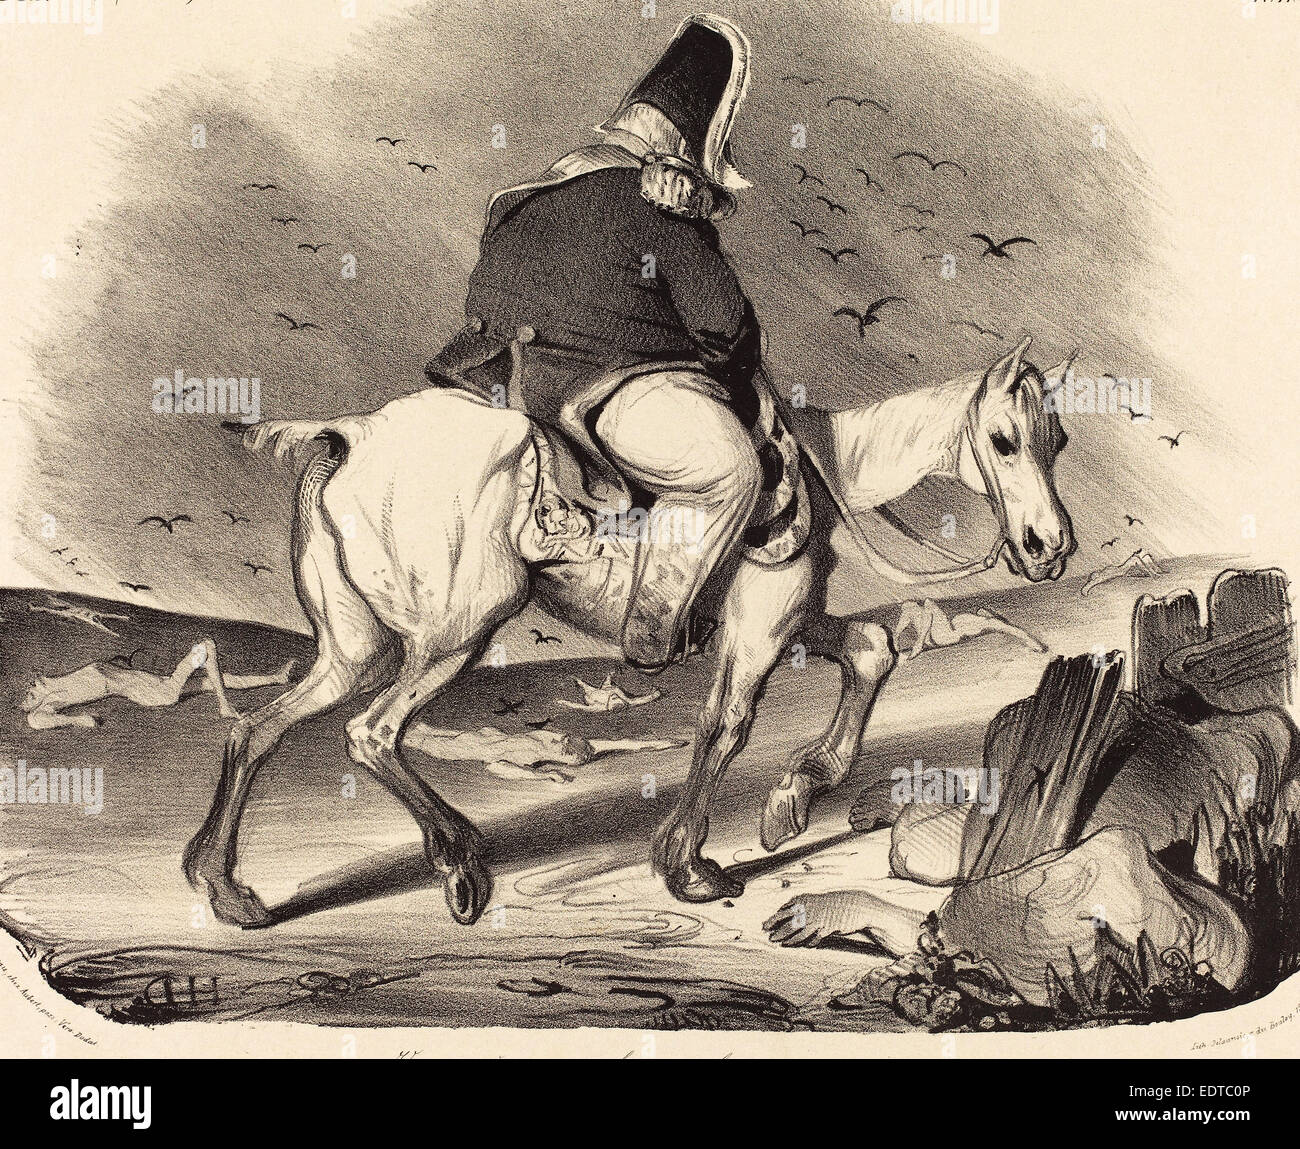 Honoré Daumier (francese, 1808 - 1879), il viaggio a travers les popolazioni empressées, 1834, litografia Foto Stock